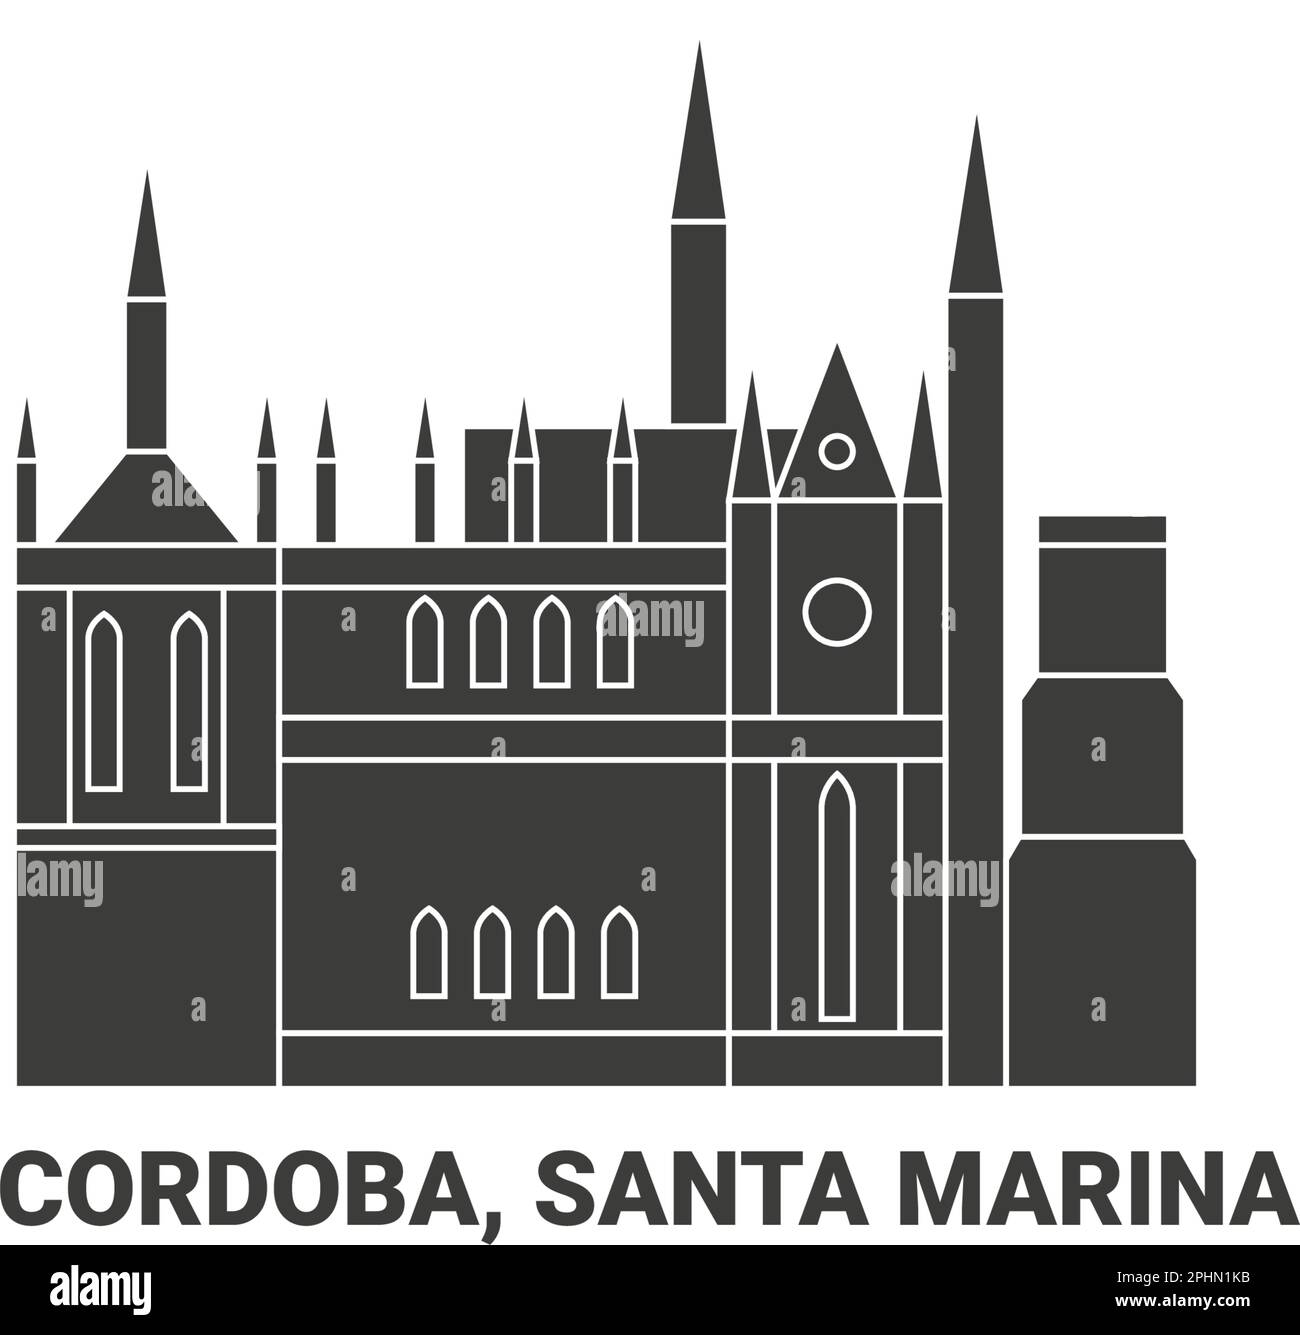 Argentina, Cordoba, Santa Marina, travel landmark vector illustration Stock Vector